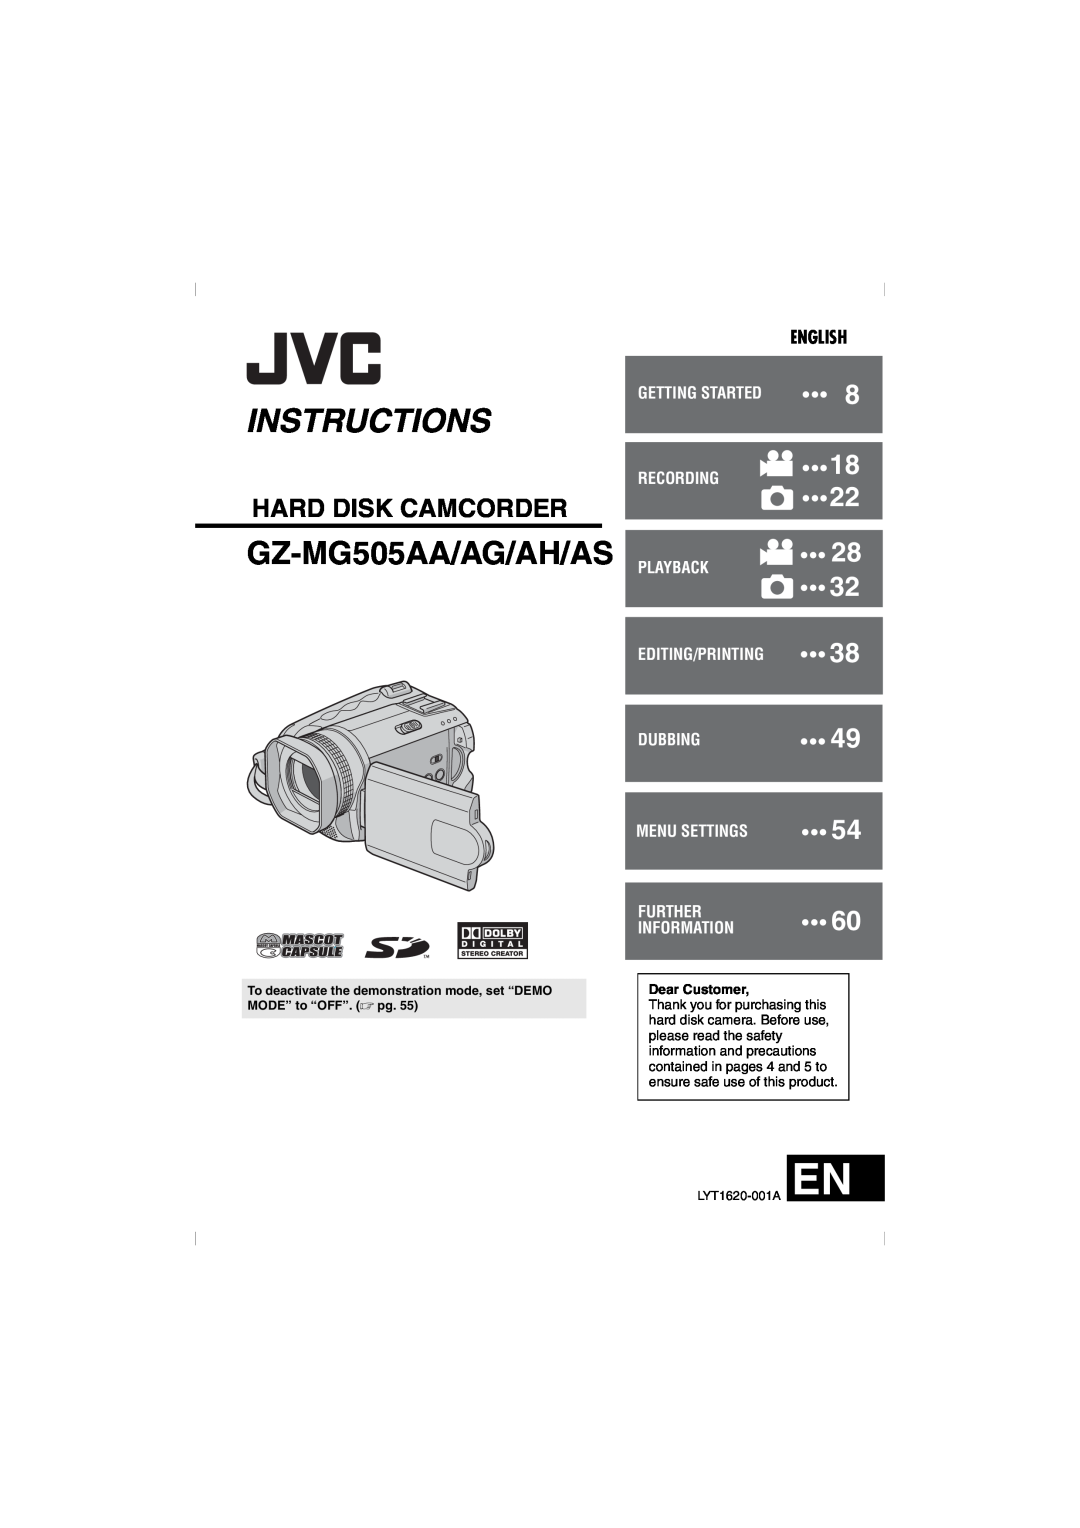 JVC GZ-MG505AG manual English, Dear Customer, Instructions, GZ-MG505AA/AG/AH/AS, Hard Disk Camcorder, Getting Started 